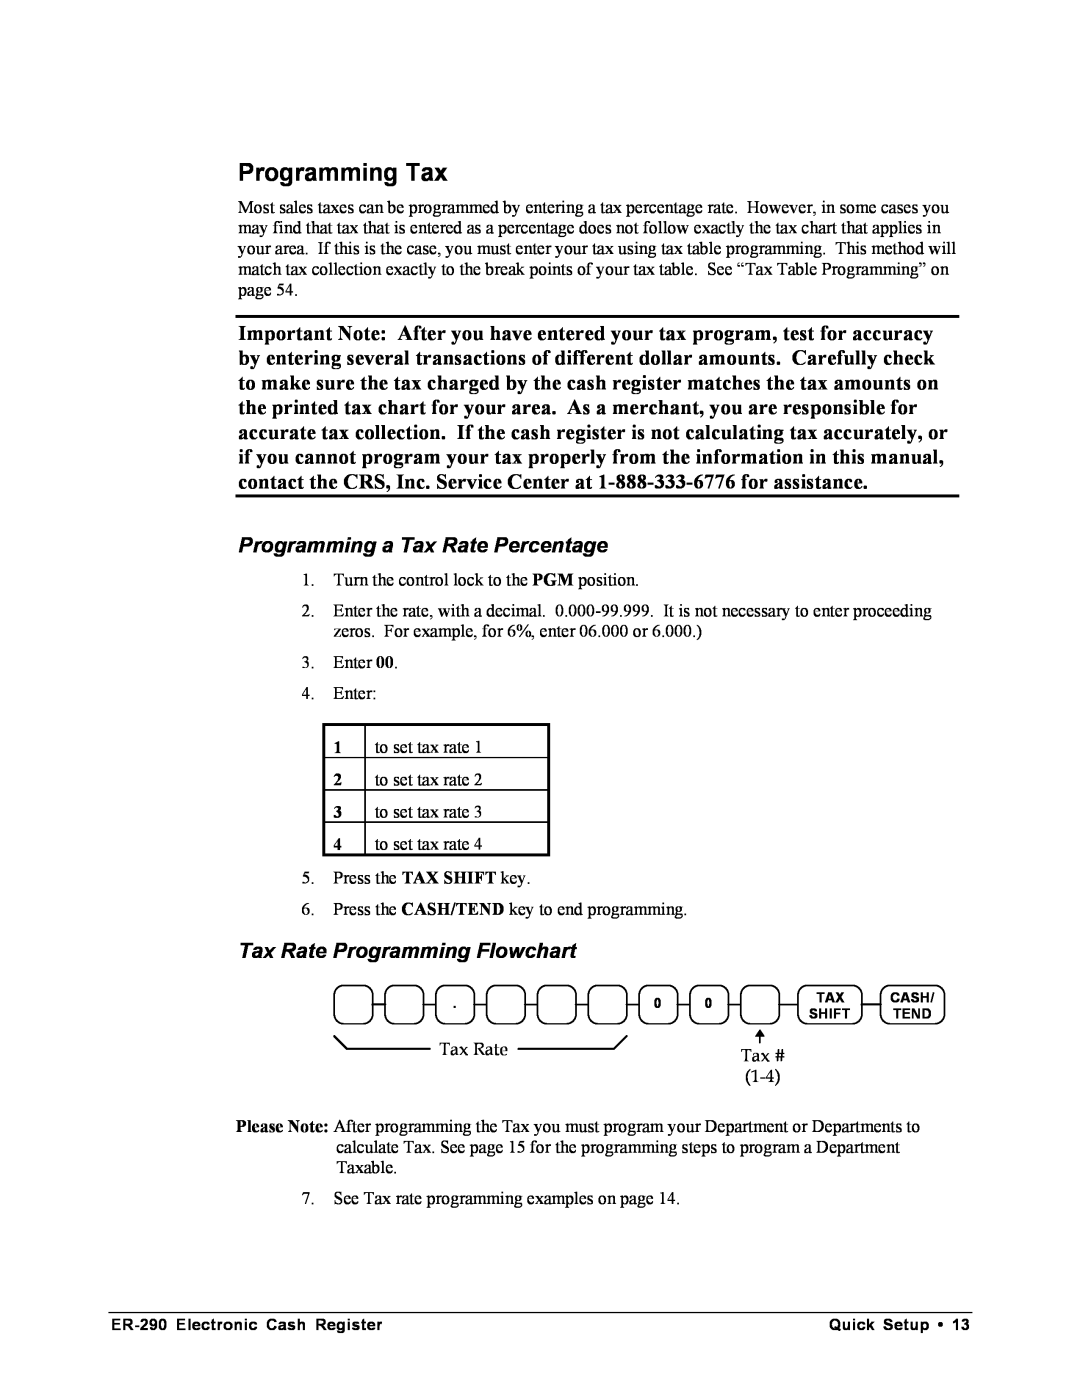 Samsung M-ER290 specifications Programming Tax, Programming a Tax Rate Percentage, Tax Rate Programming Flowchart 